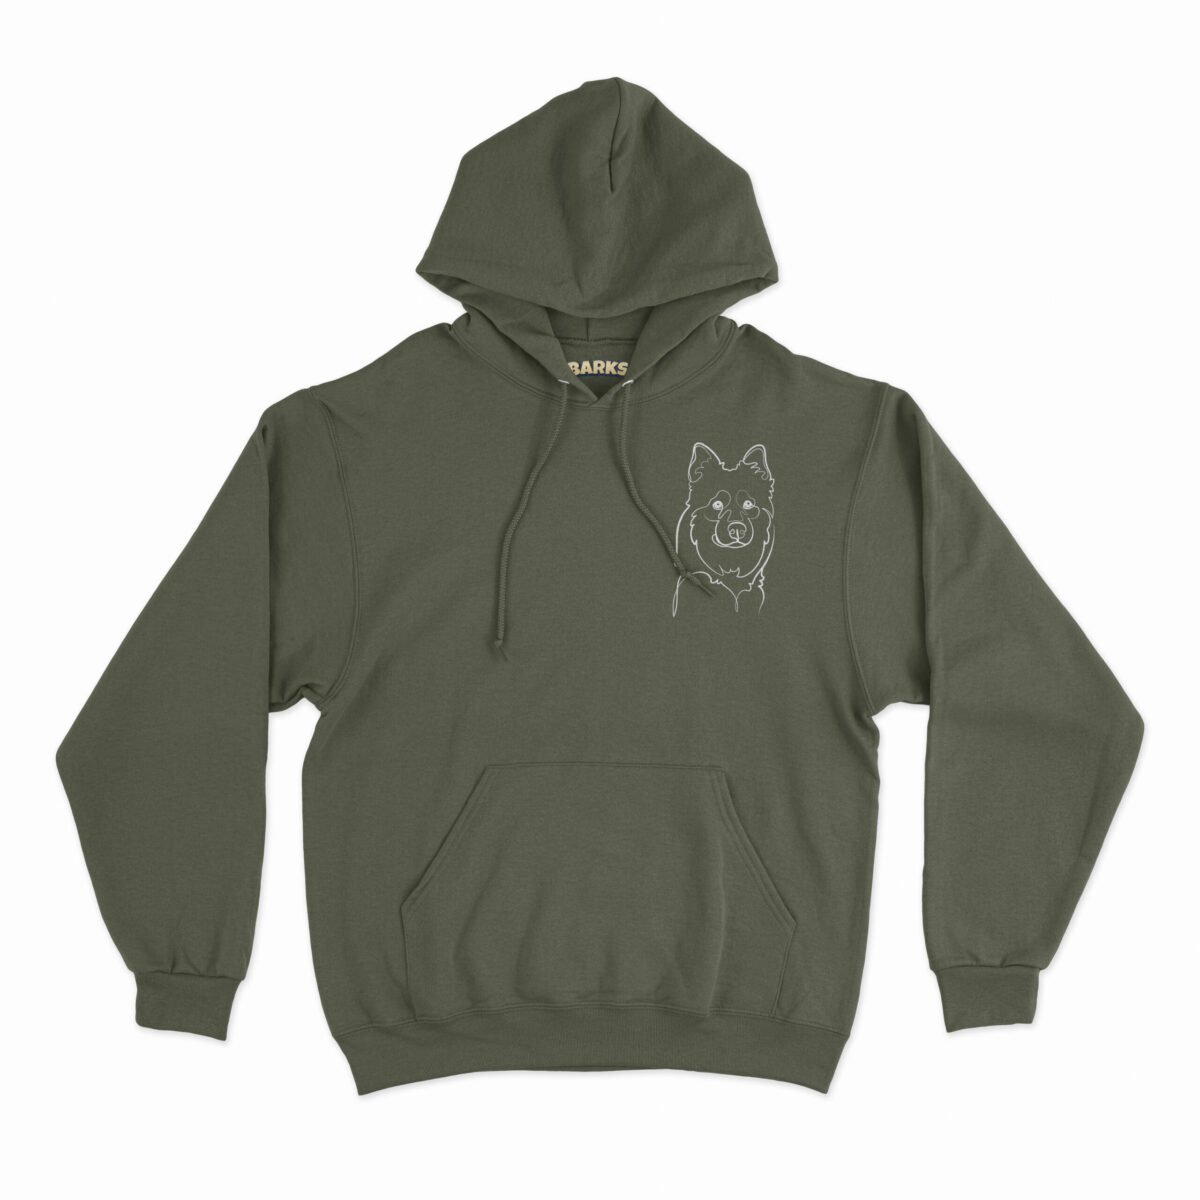 backs gepersonaliseerd hondenportret unisex hoodie khaki